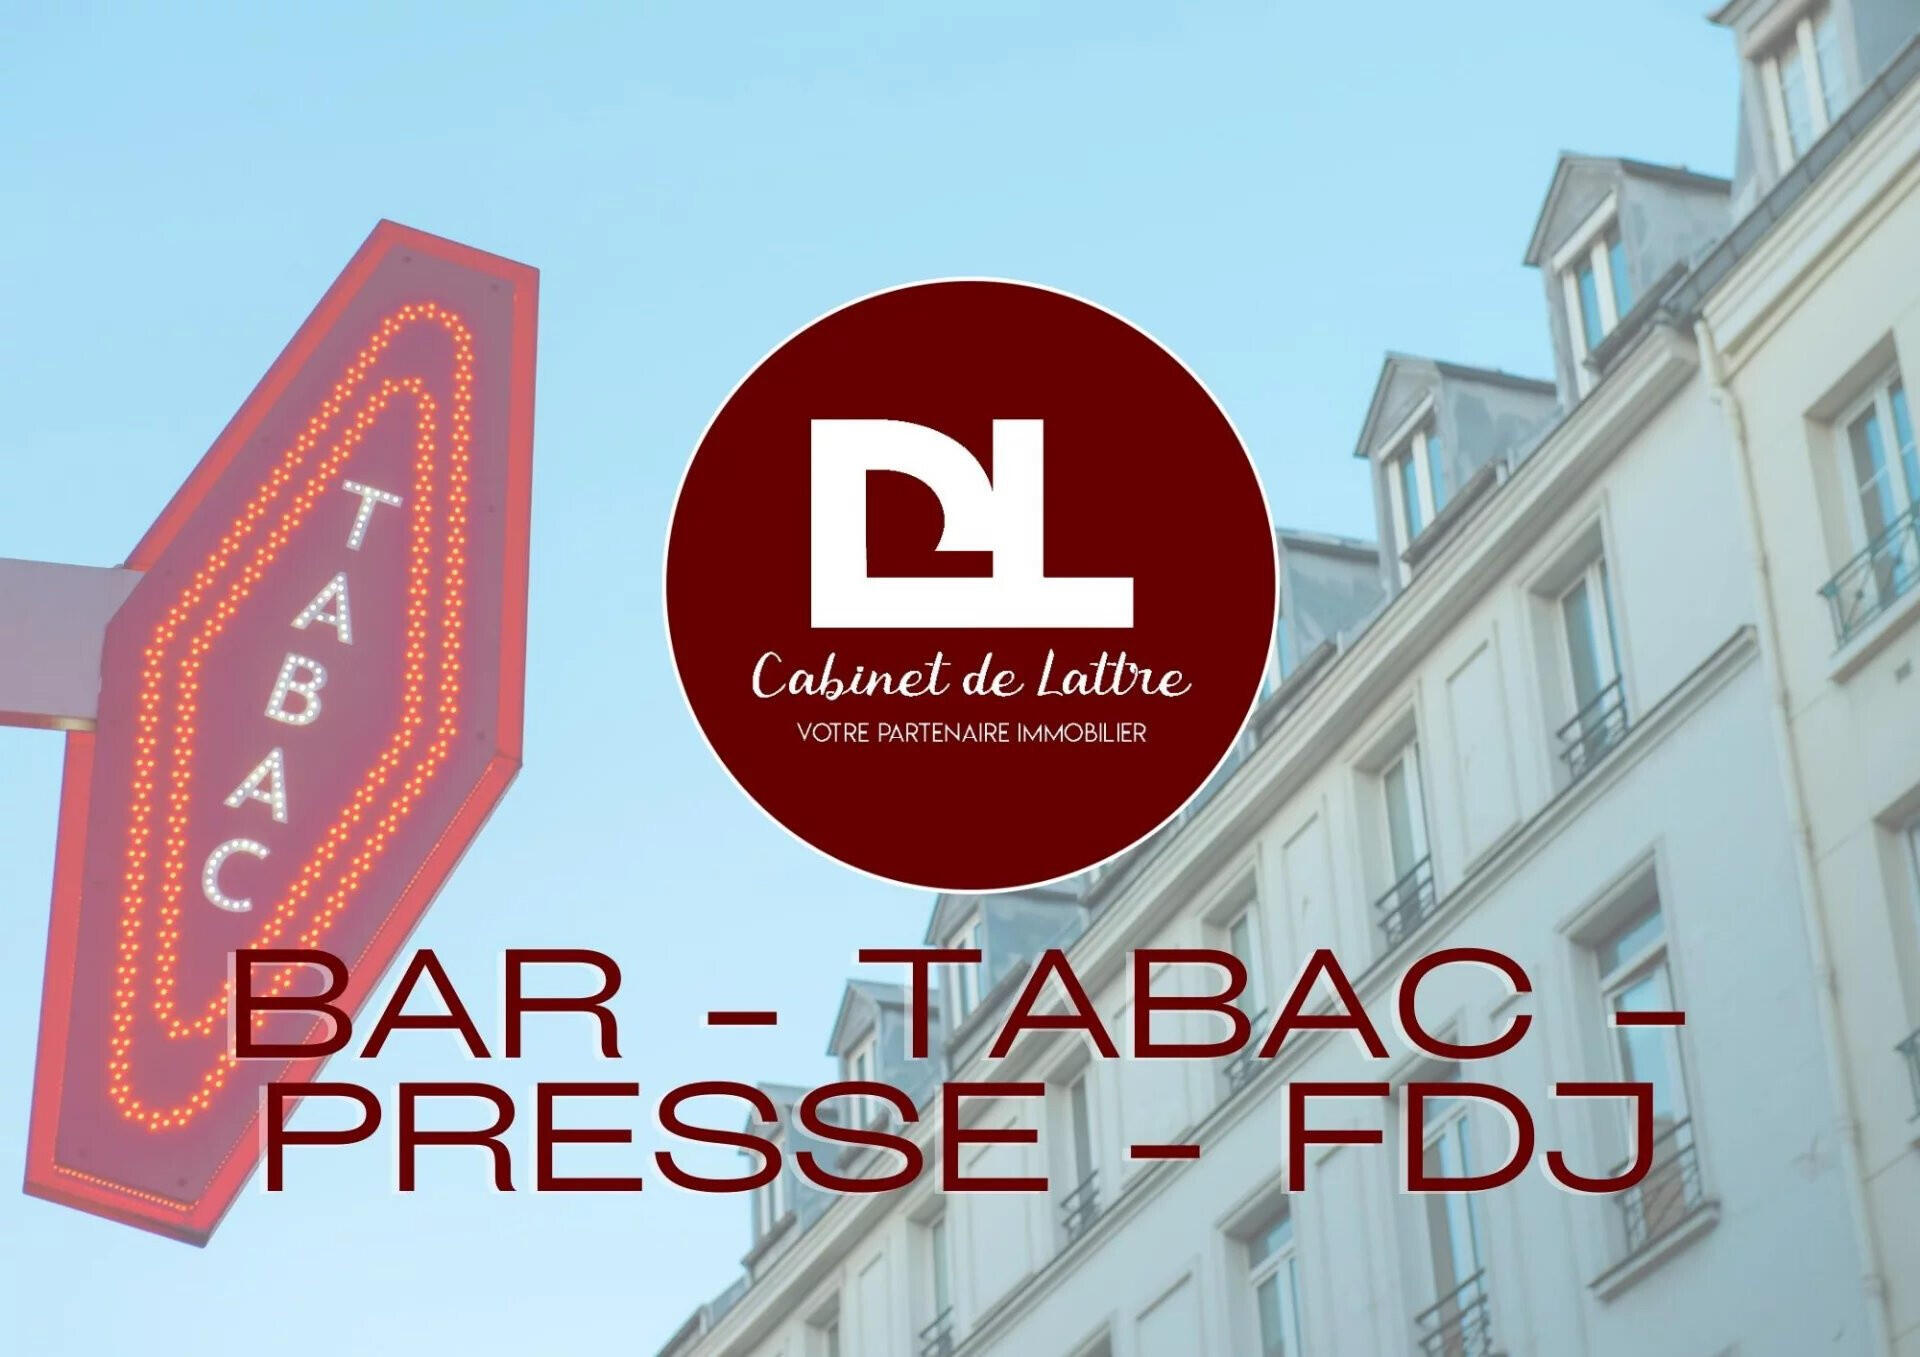 Vente bar tabac presse FDJ à 30 mn de Clermont-Fd